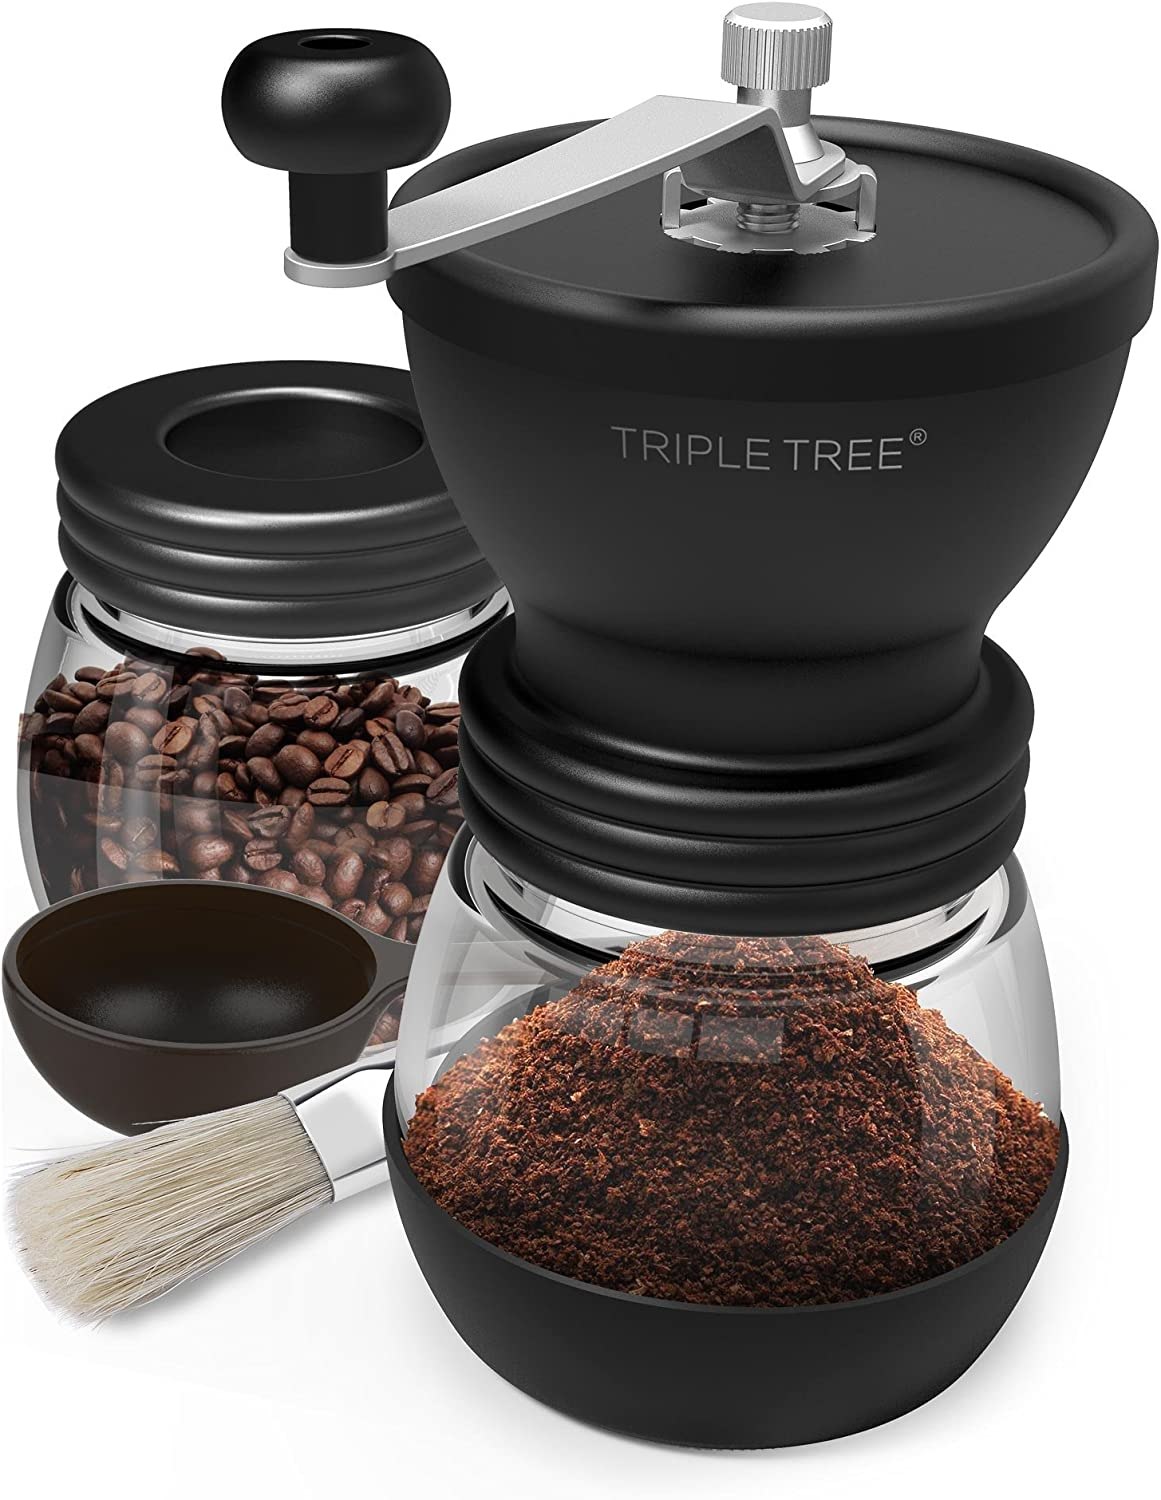 https://cdn.bestreviews.com/images/v4desktop/product-matrix/triple-tree-manual-coffee-grinder.jpg